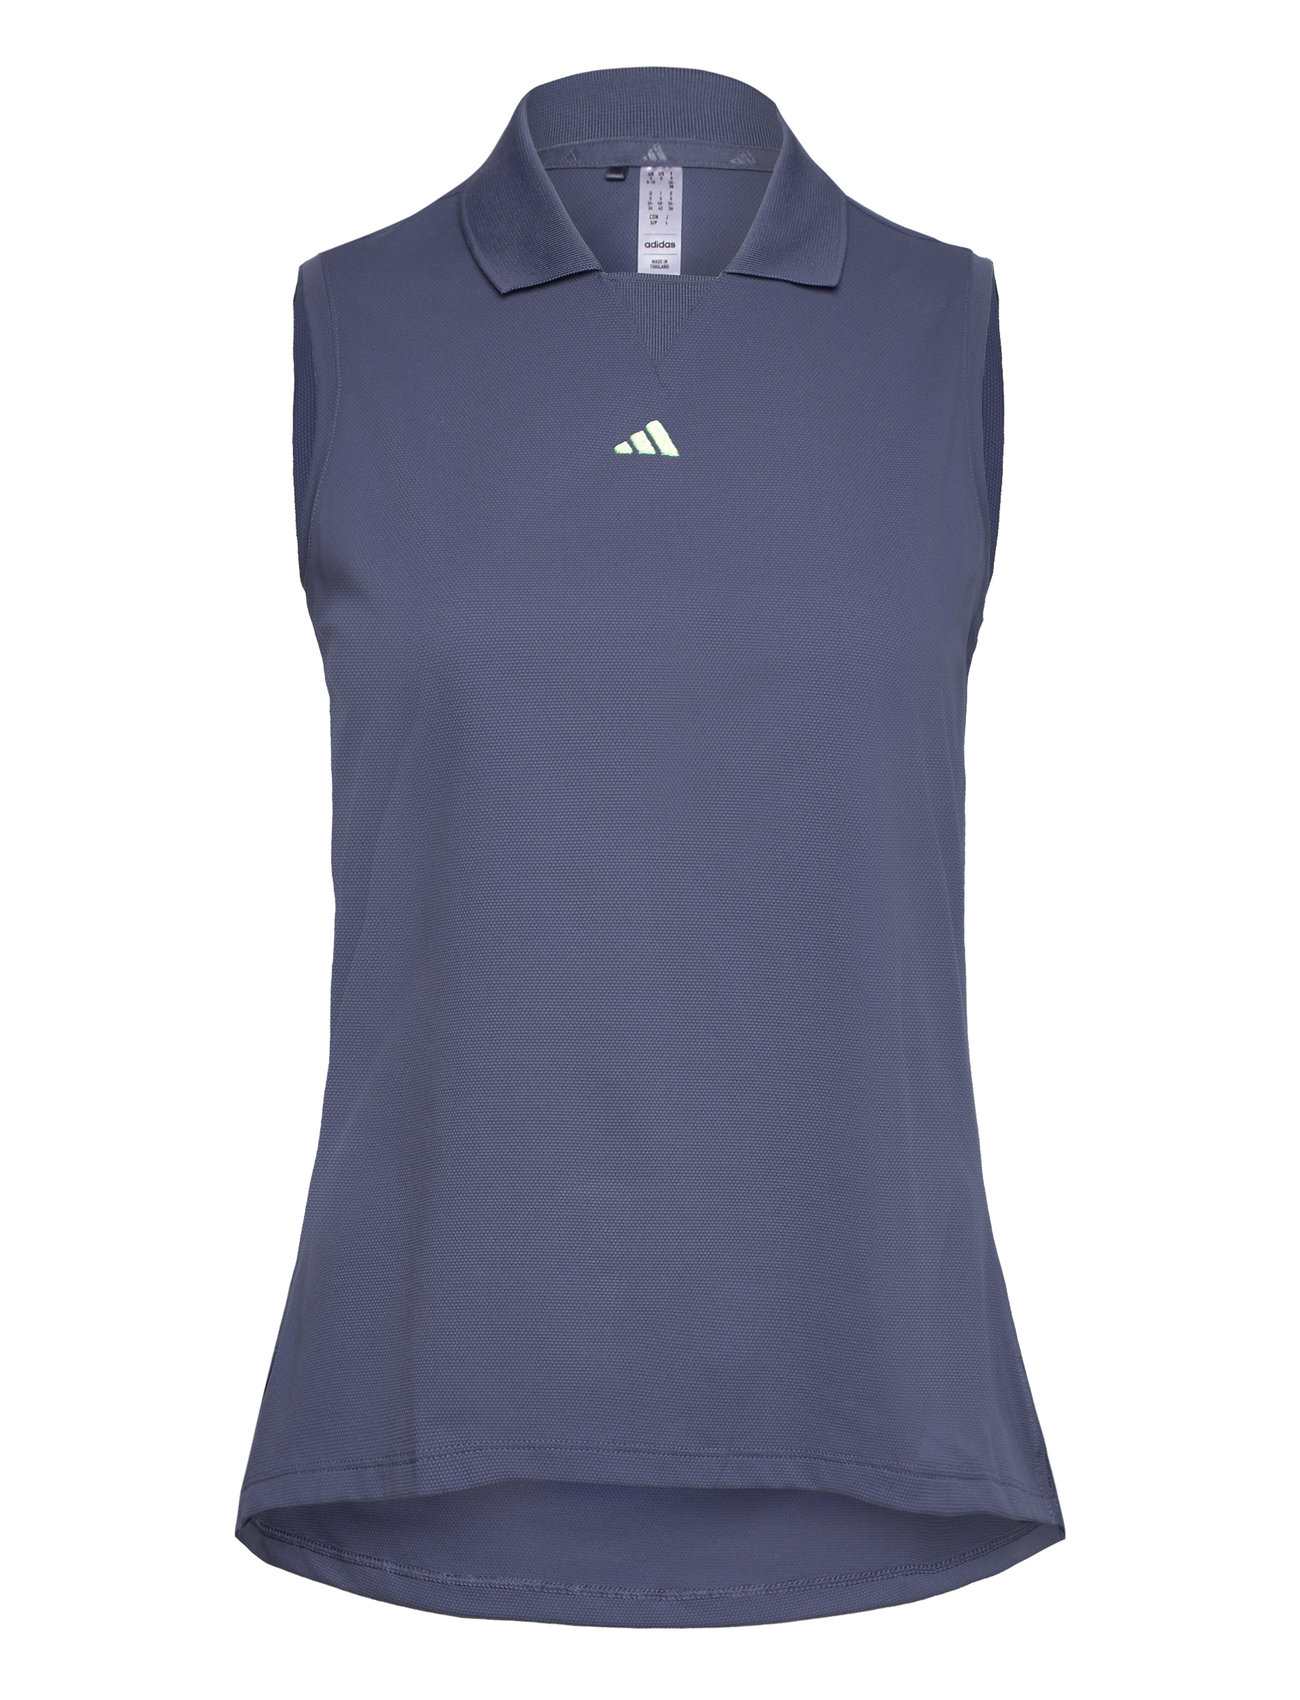 W Spt Sl P Sport T-shirts & Tops Polos Blue Adidas Golf